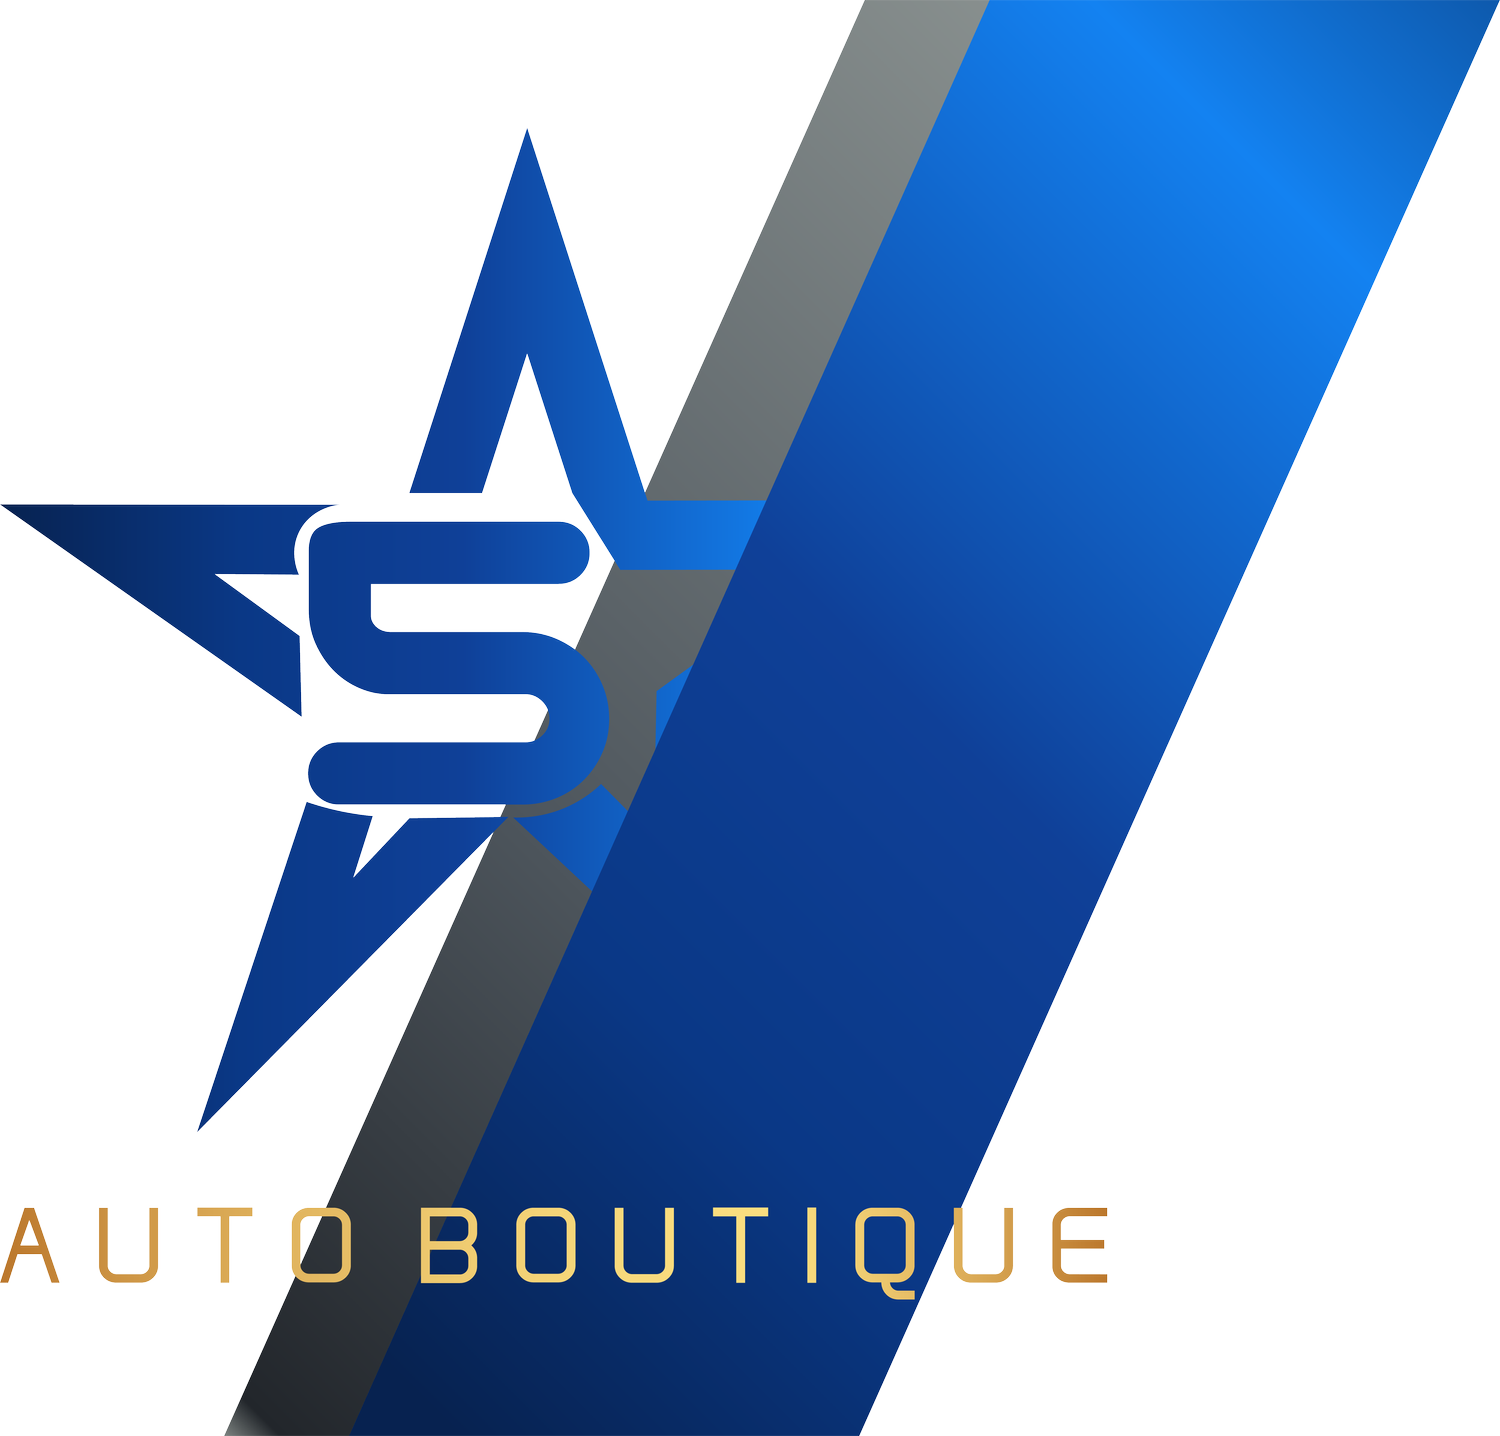 5 Star Auto Boutique LLC